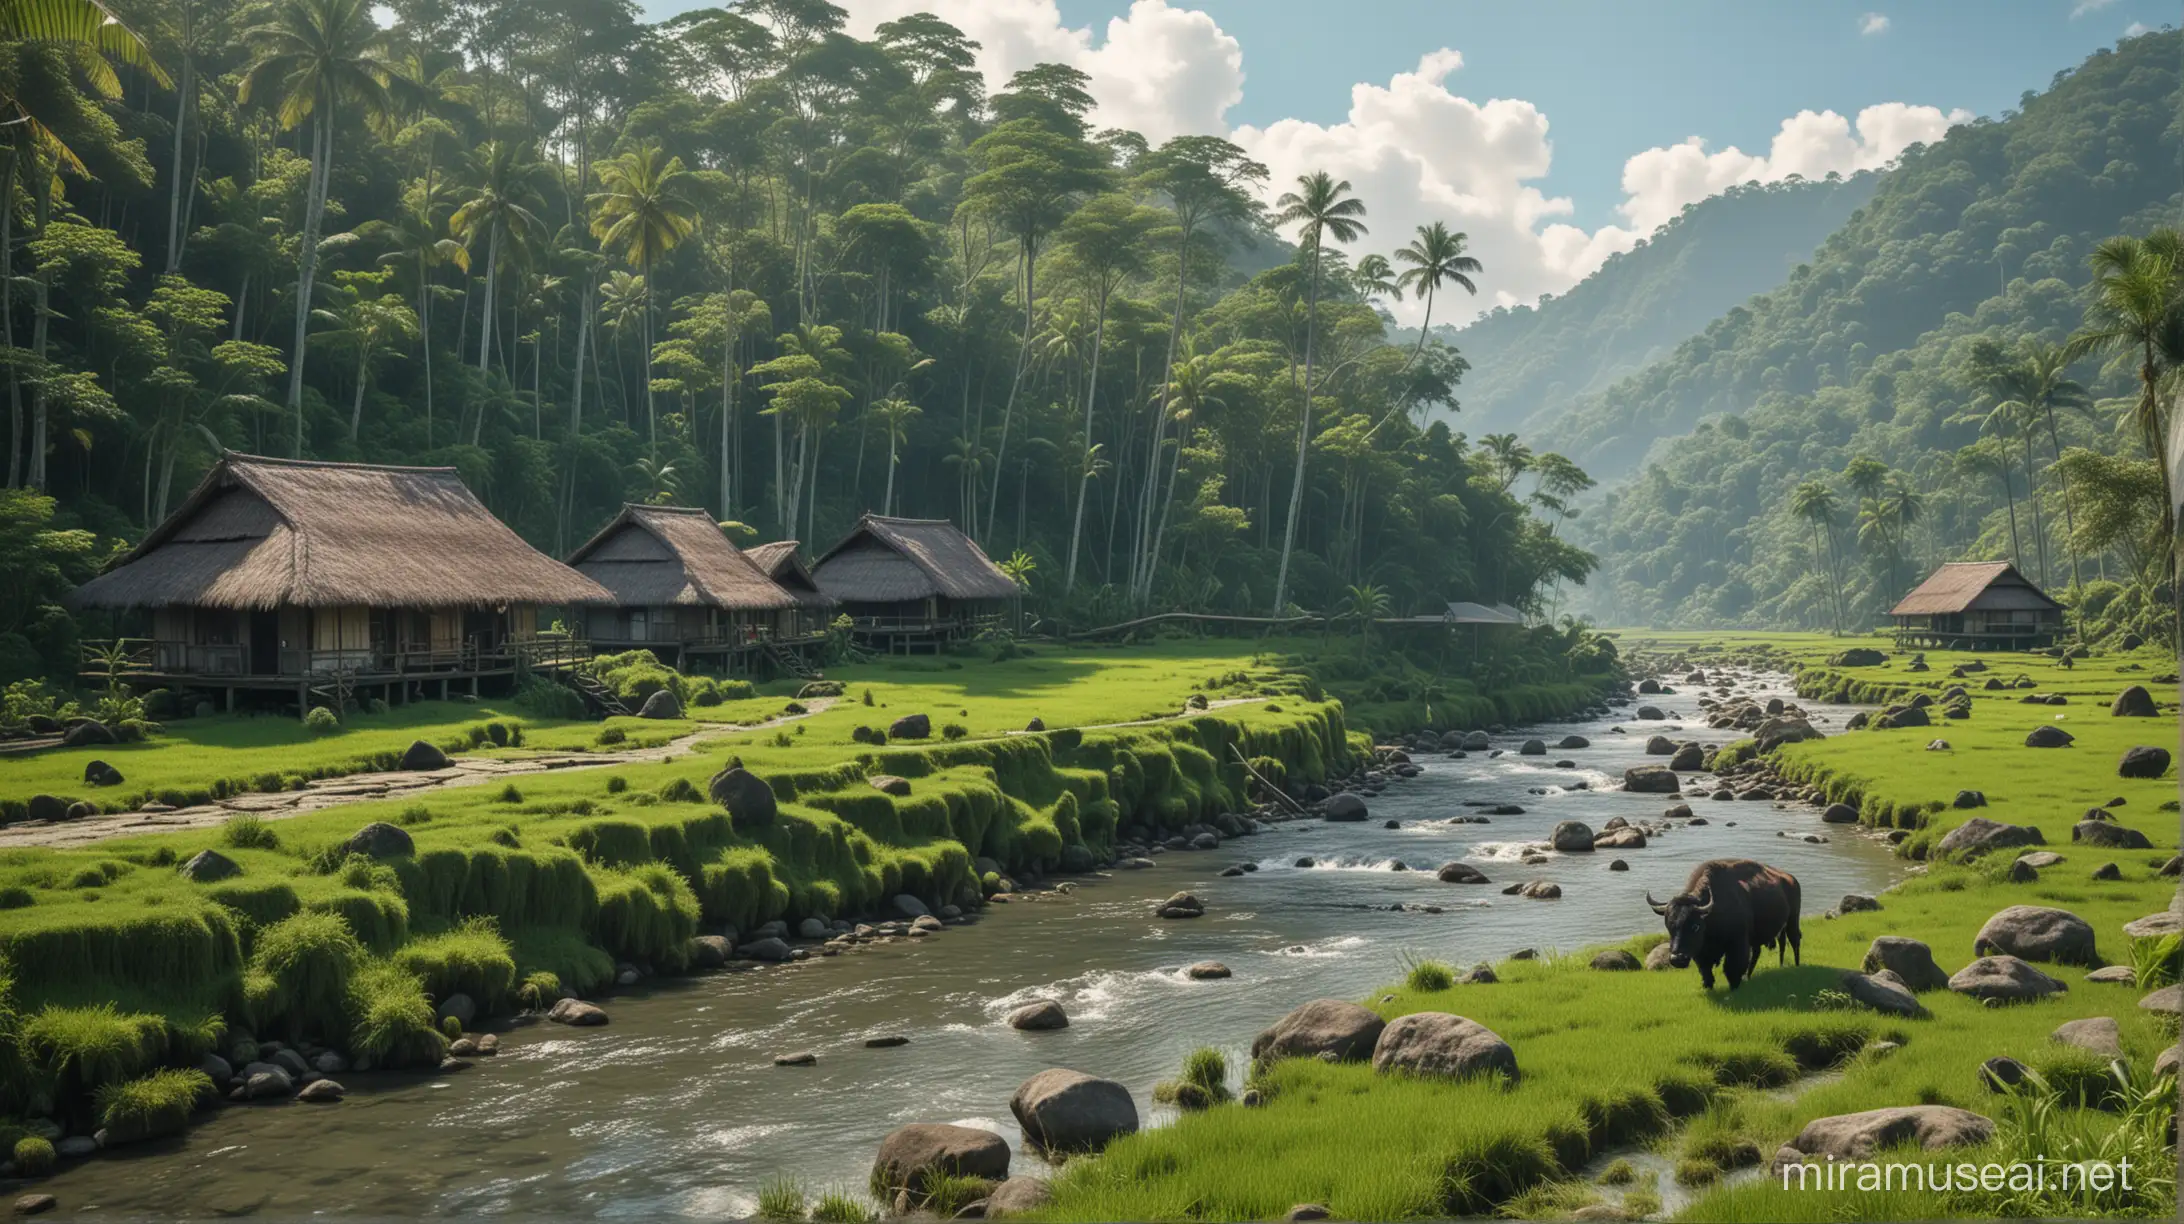  pemukiman rumah Indonesia yang terletak di tengah tanaman hijau subur, LATAR BELAKANG pagi hari yg cerah,aliran sungai yang mengalir jernih berwarna putih hijau dan hitam di atas bebatuan yang tertutup lumut, dan pesawahan, awan biru yg cerah dikelilingi oleh pelukan tenang dari hutan lebat. KELUARGA kerbau MINUM DARI ALIRAN, RINCIAN, SINEMATIS, 4K,ultra HDR extreme